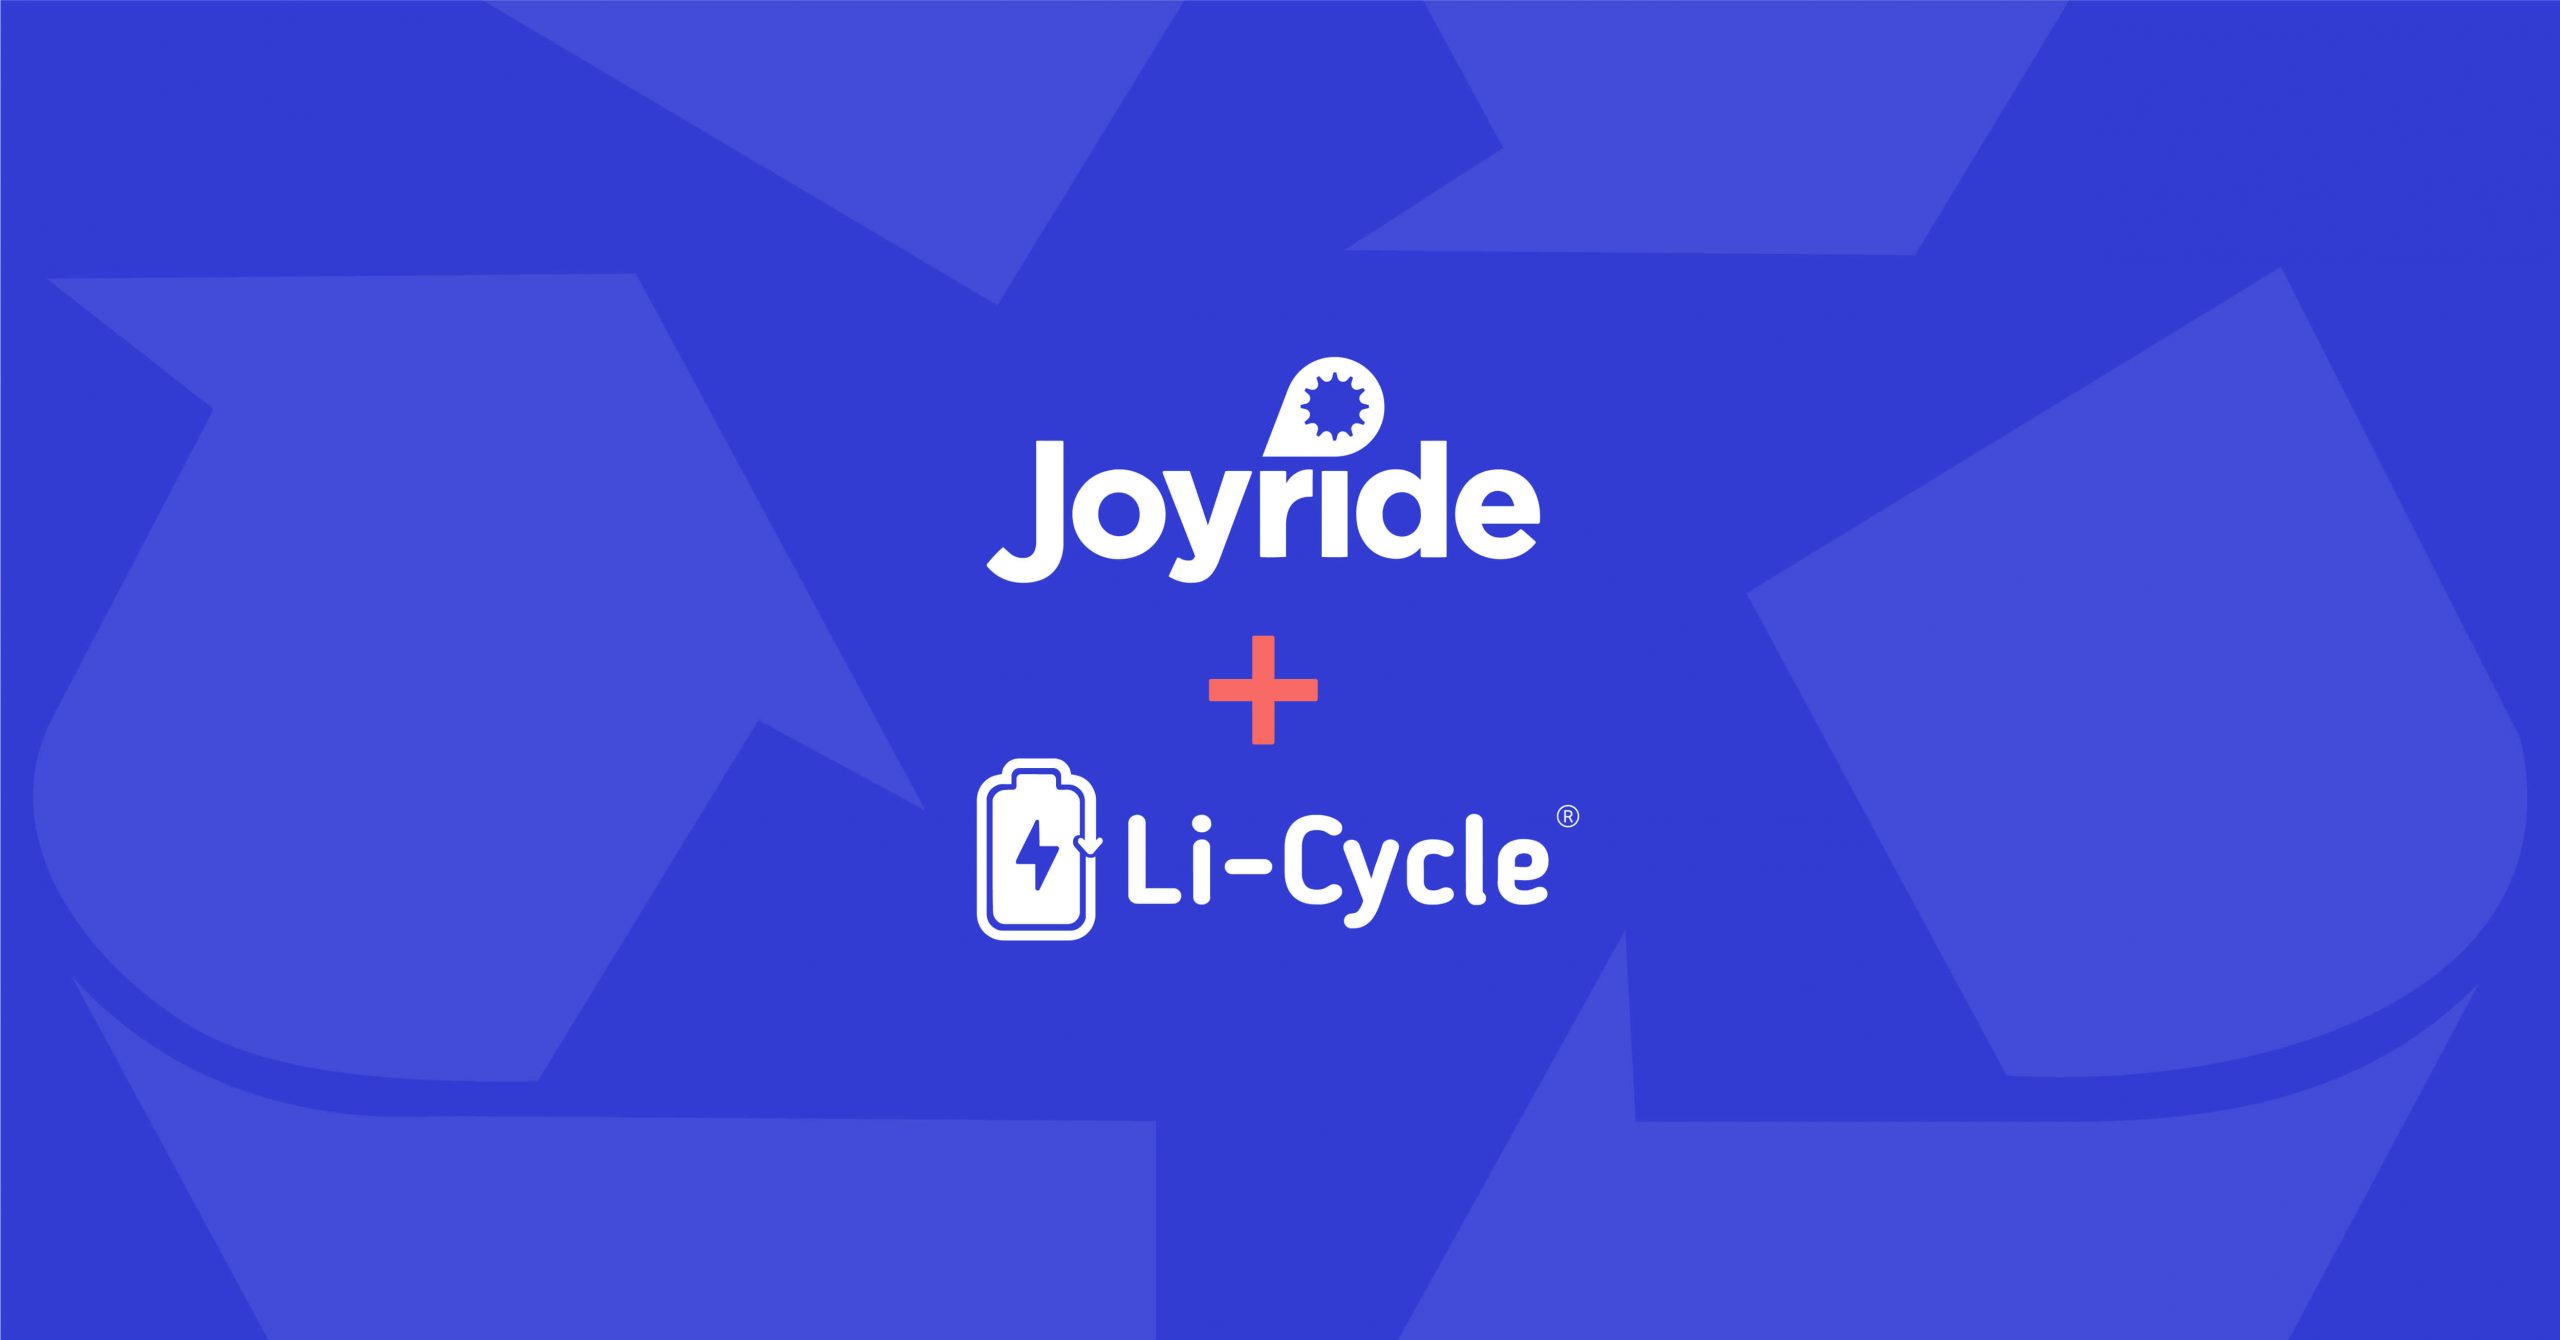 White Joyride logo and white Li-Cycle logo on a blue background